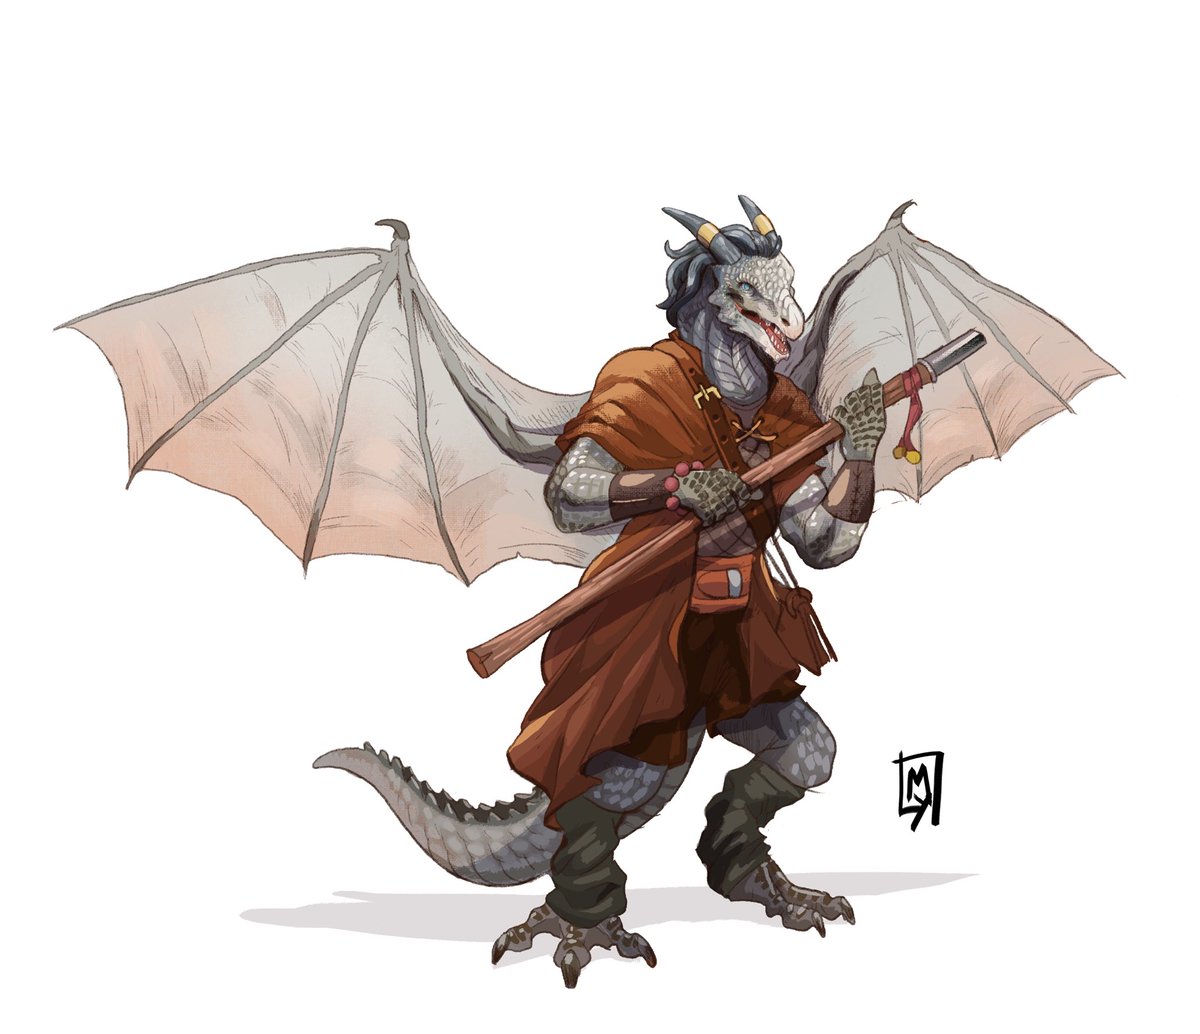 Akri, the Dragonborn cleric.